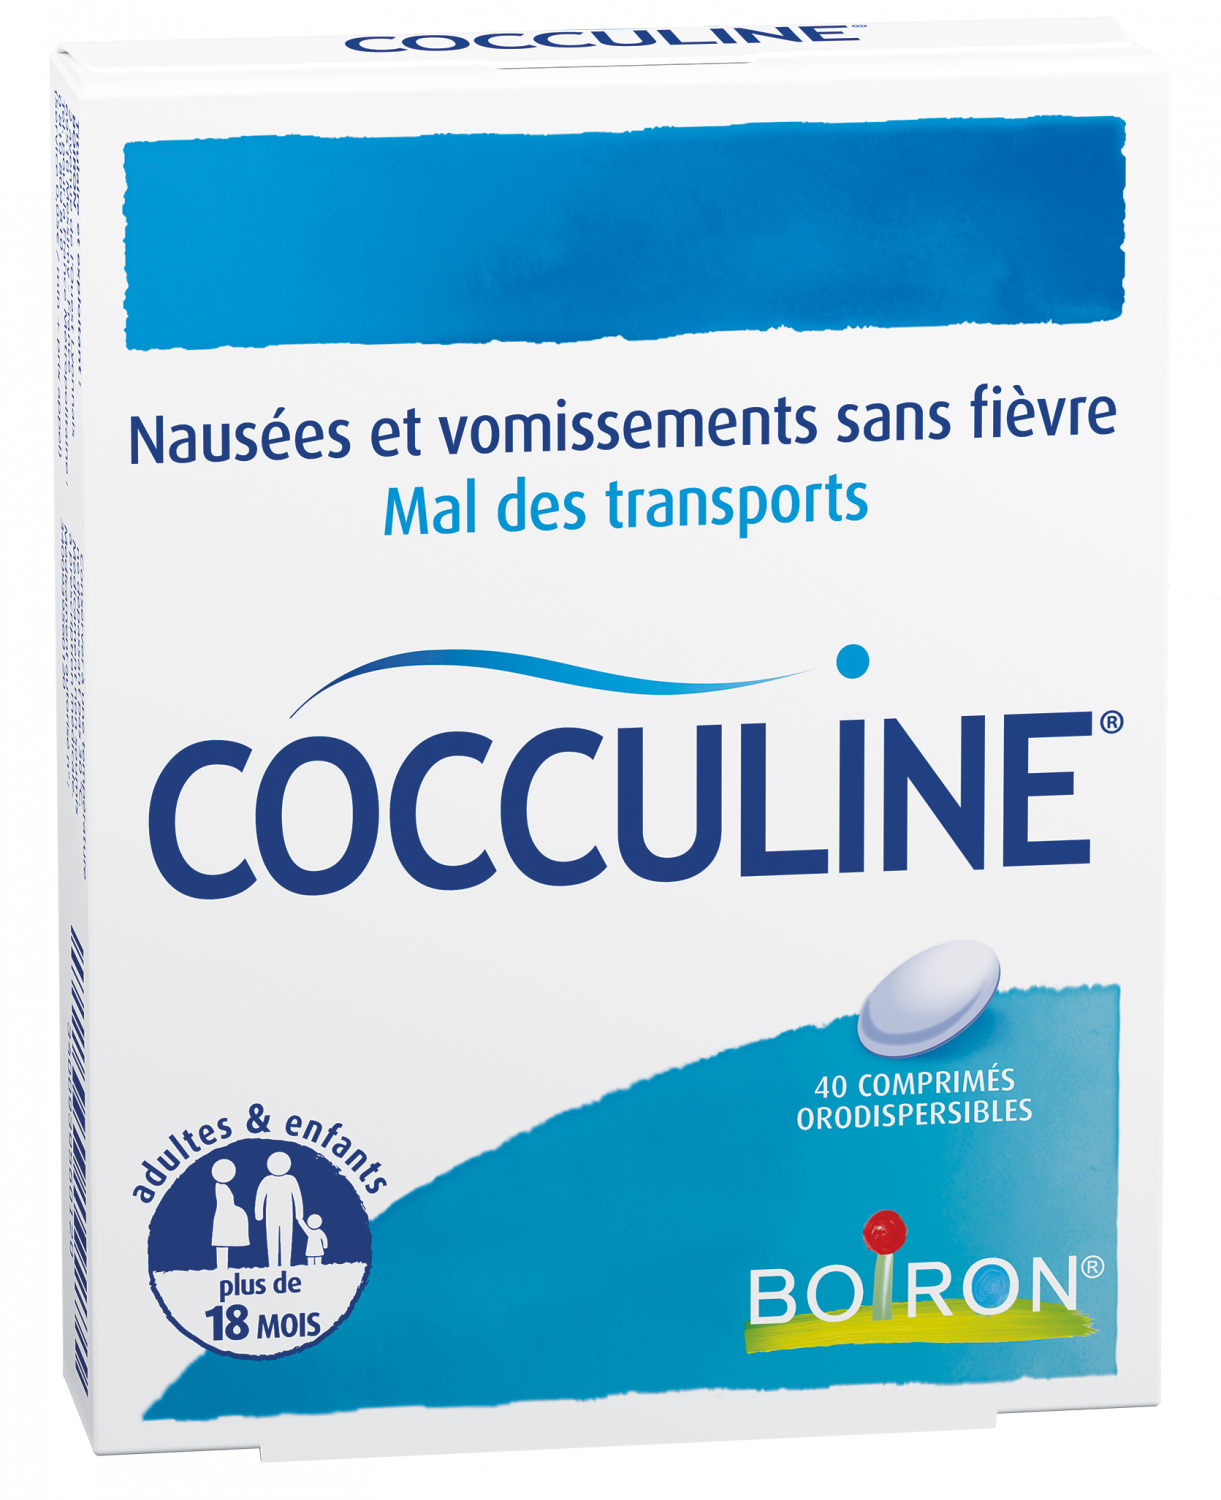 Boiron cocculine 1374072273 1